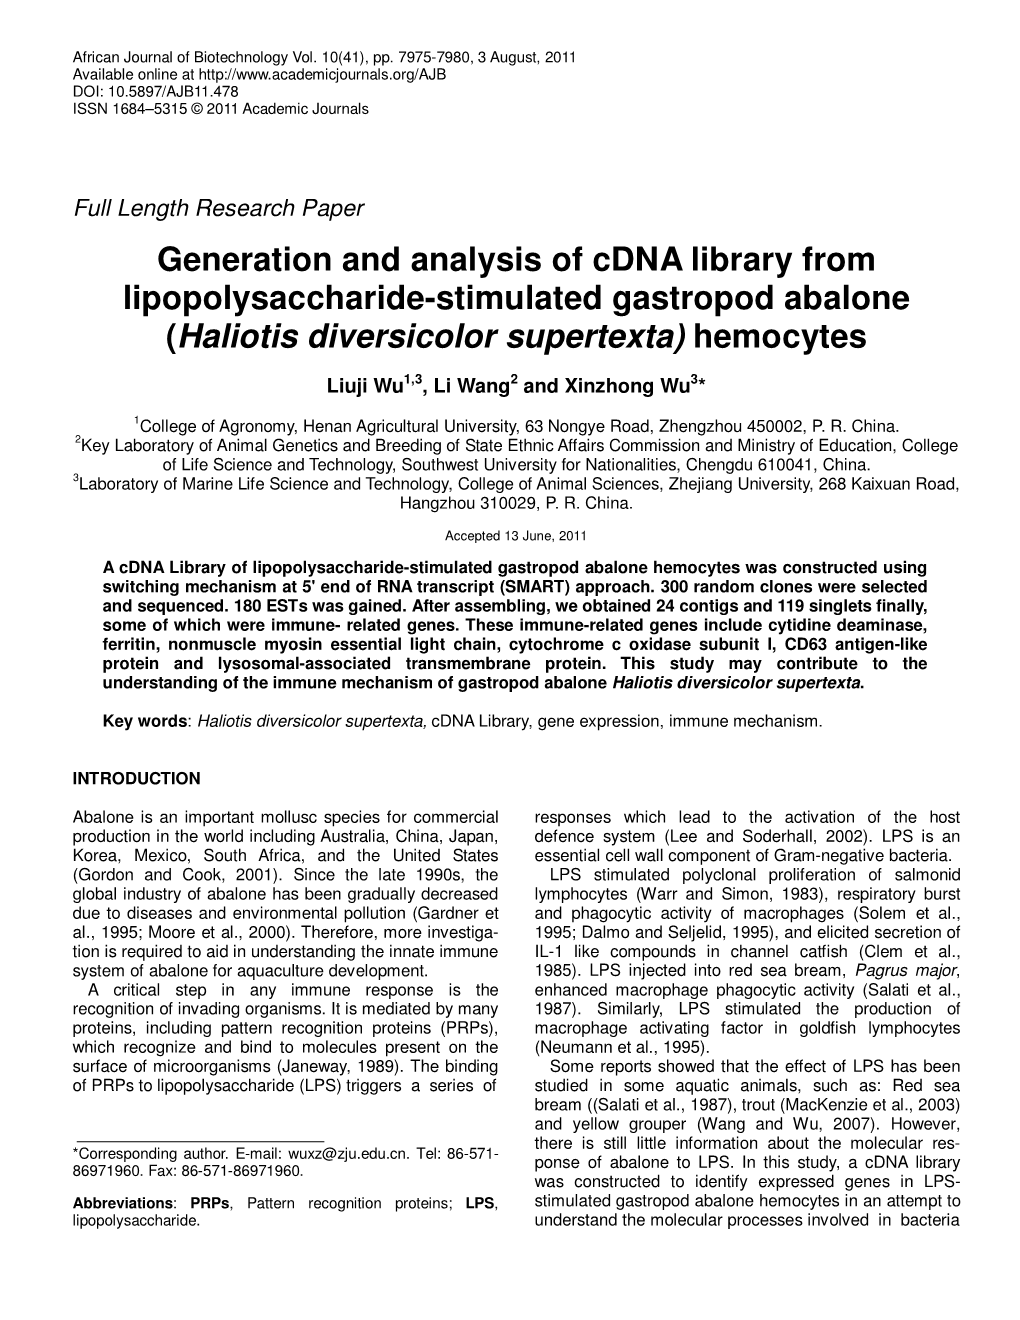 Haliotis Diversicolor Supertexta) Hemocytes